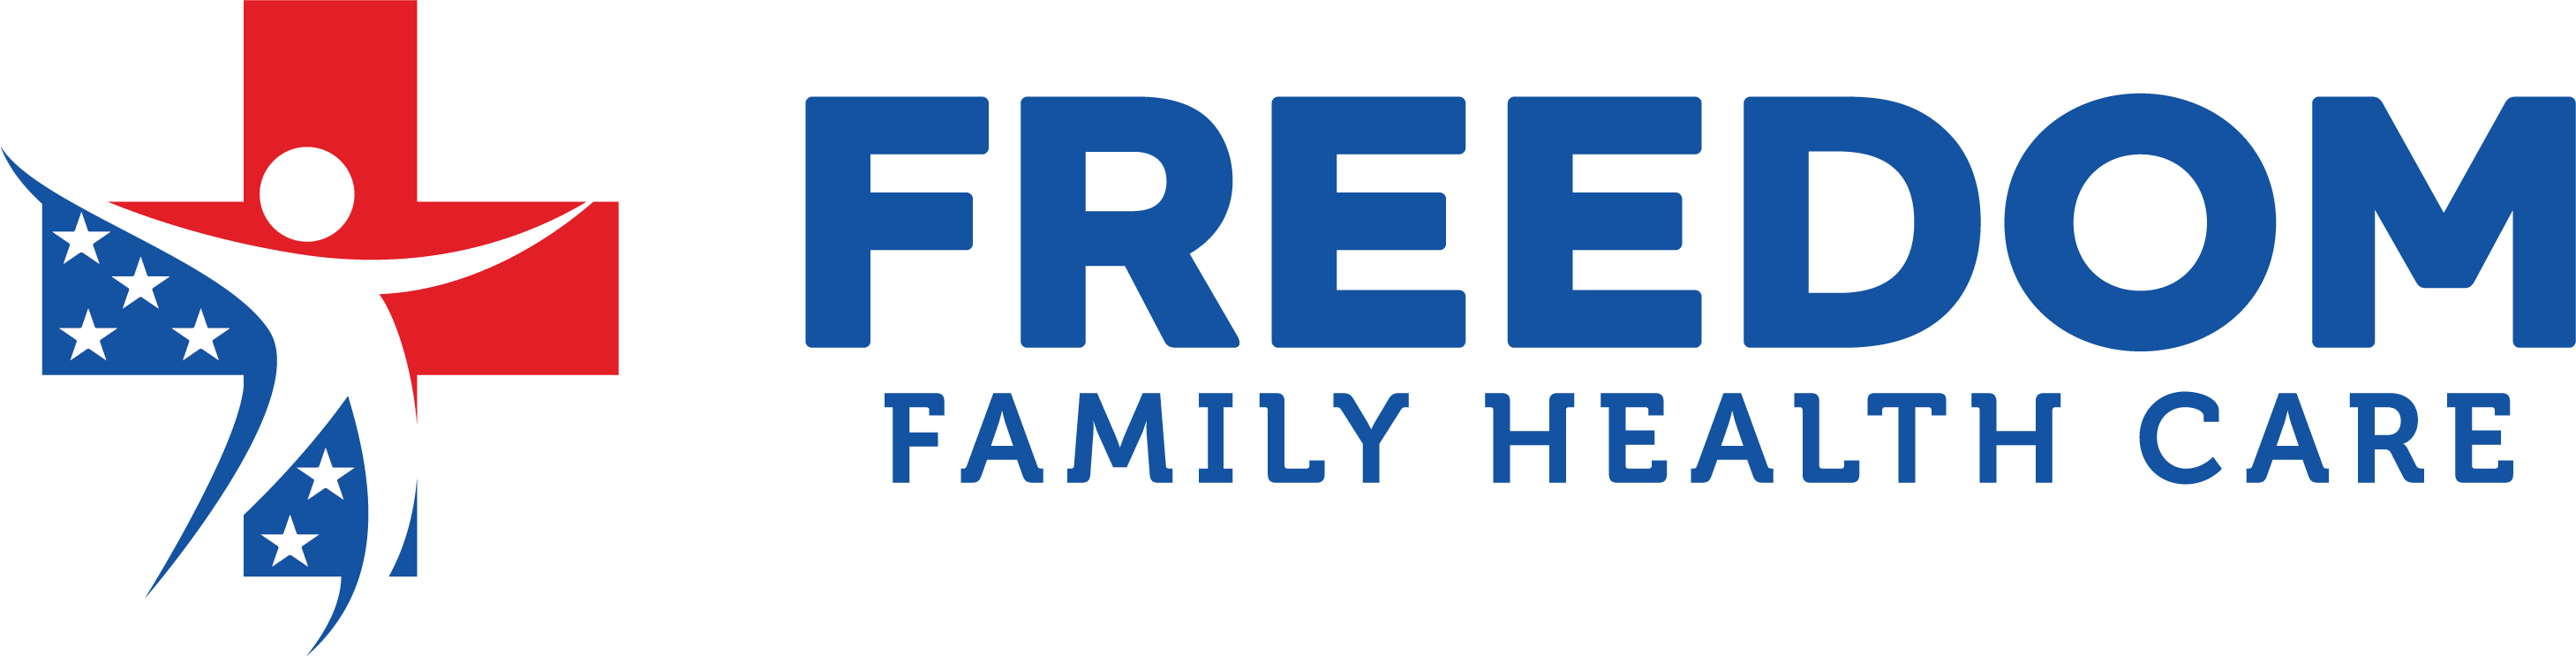 Freedom Family Health Care